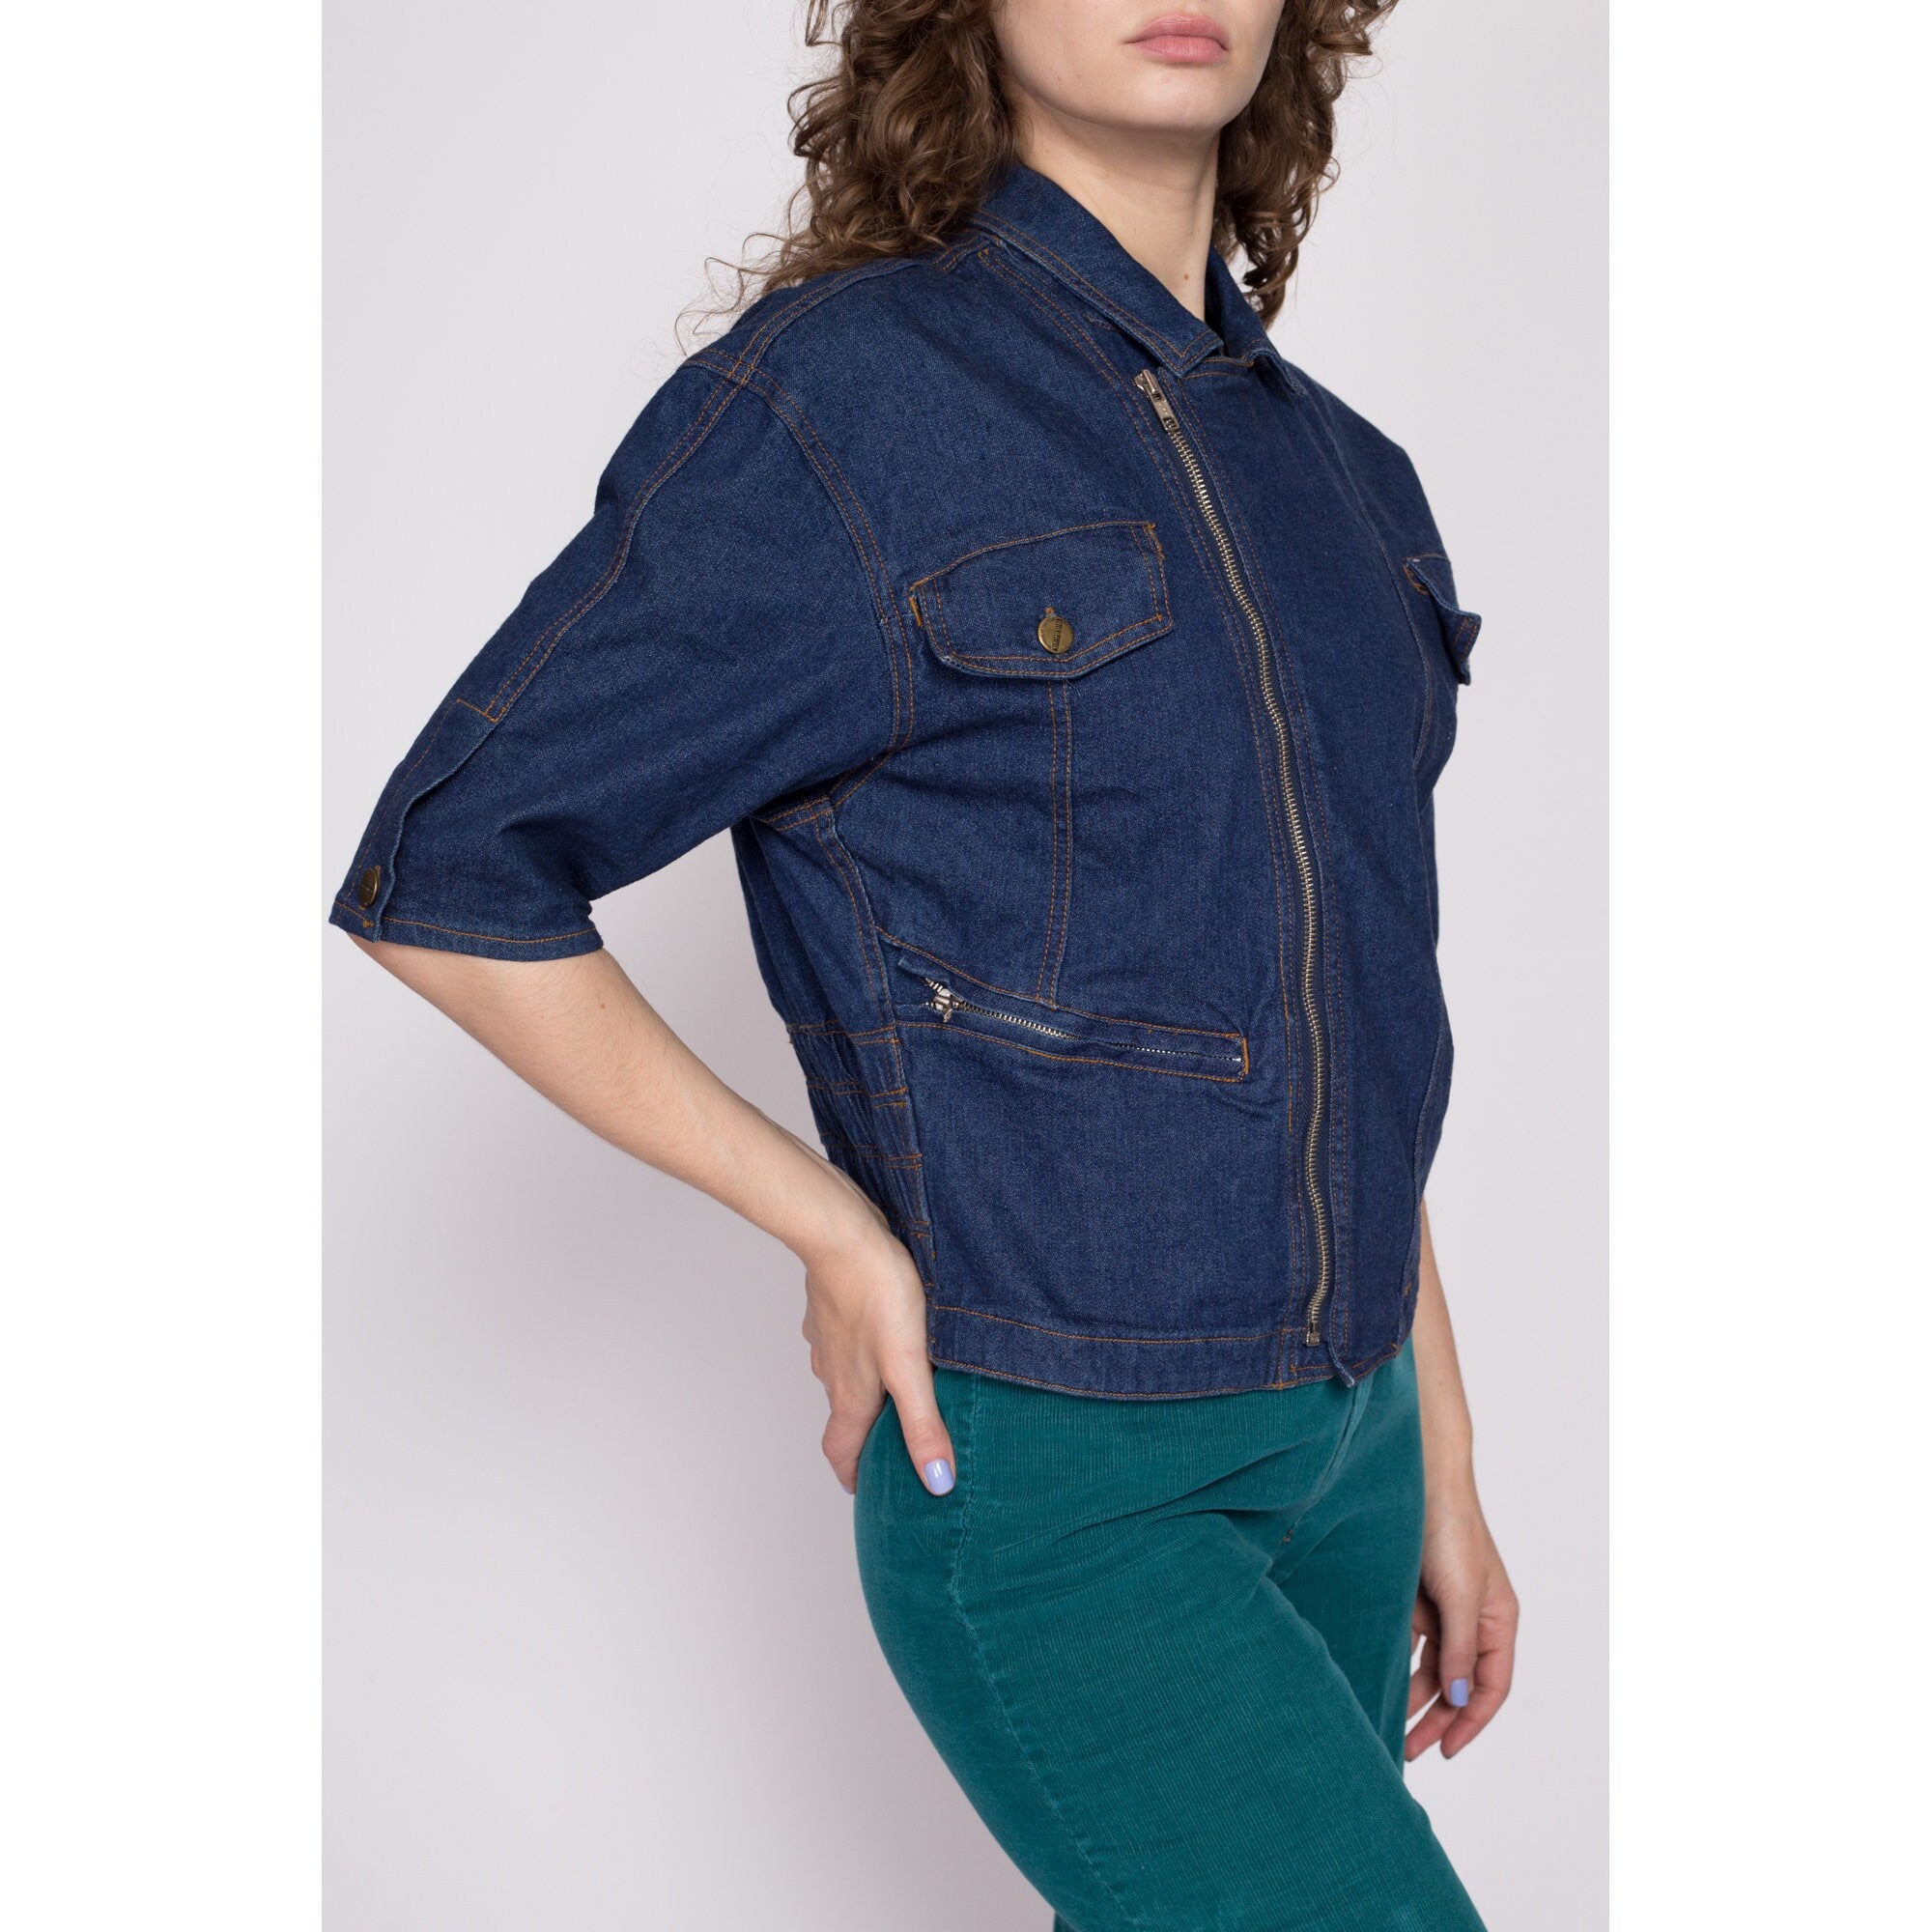 Denim Blue Denim Jacket by RIB for rent online | FLYROBE